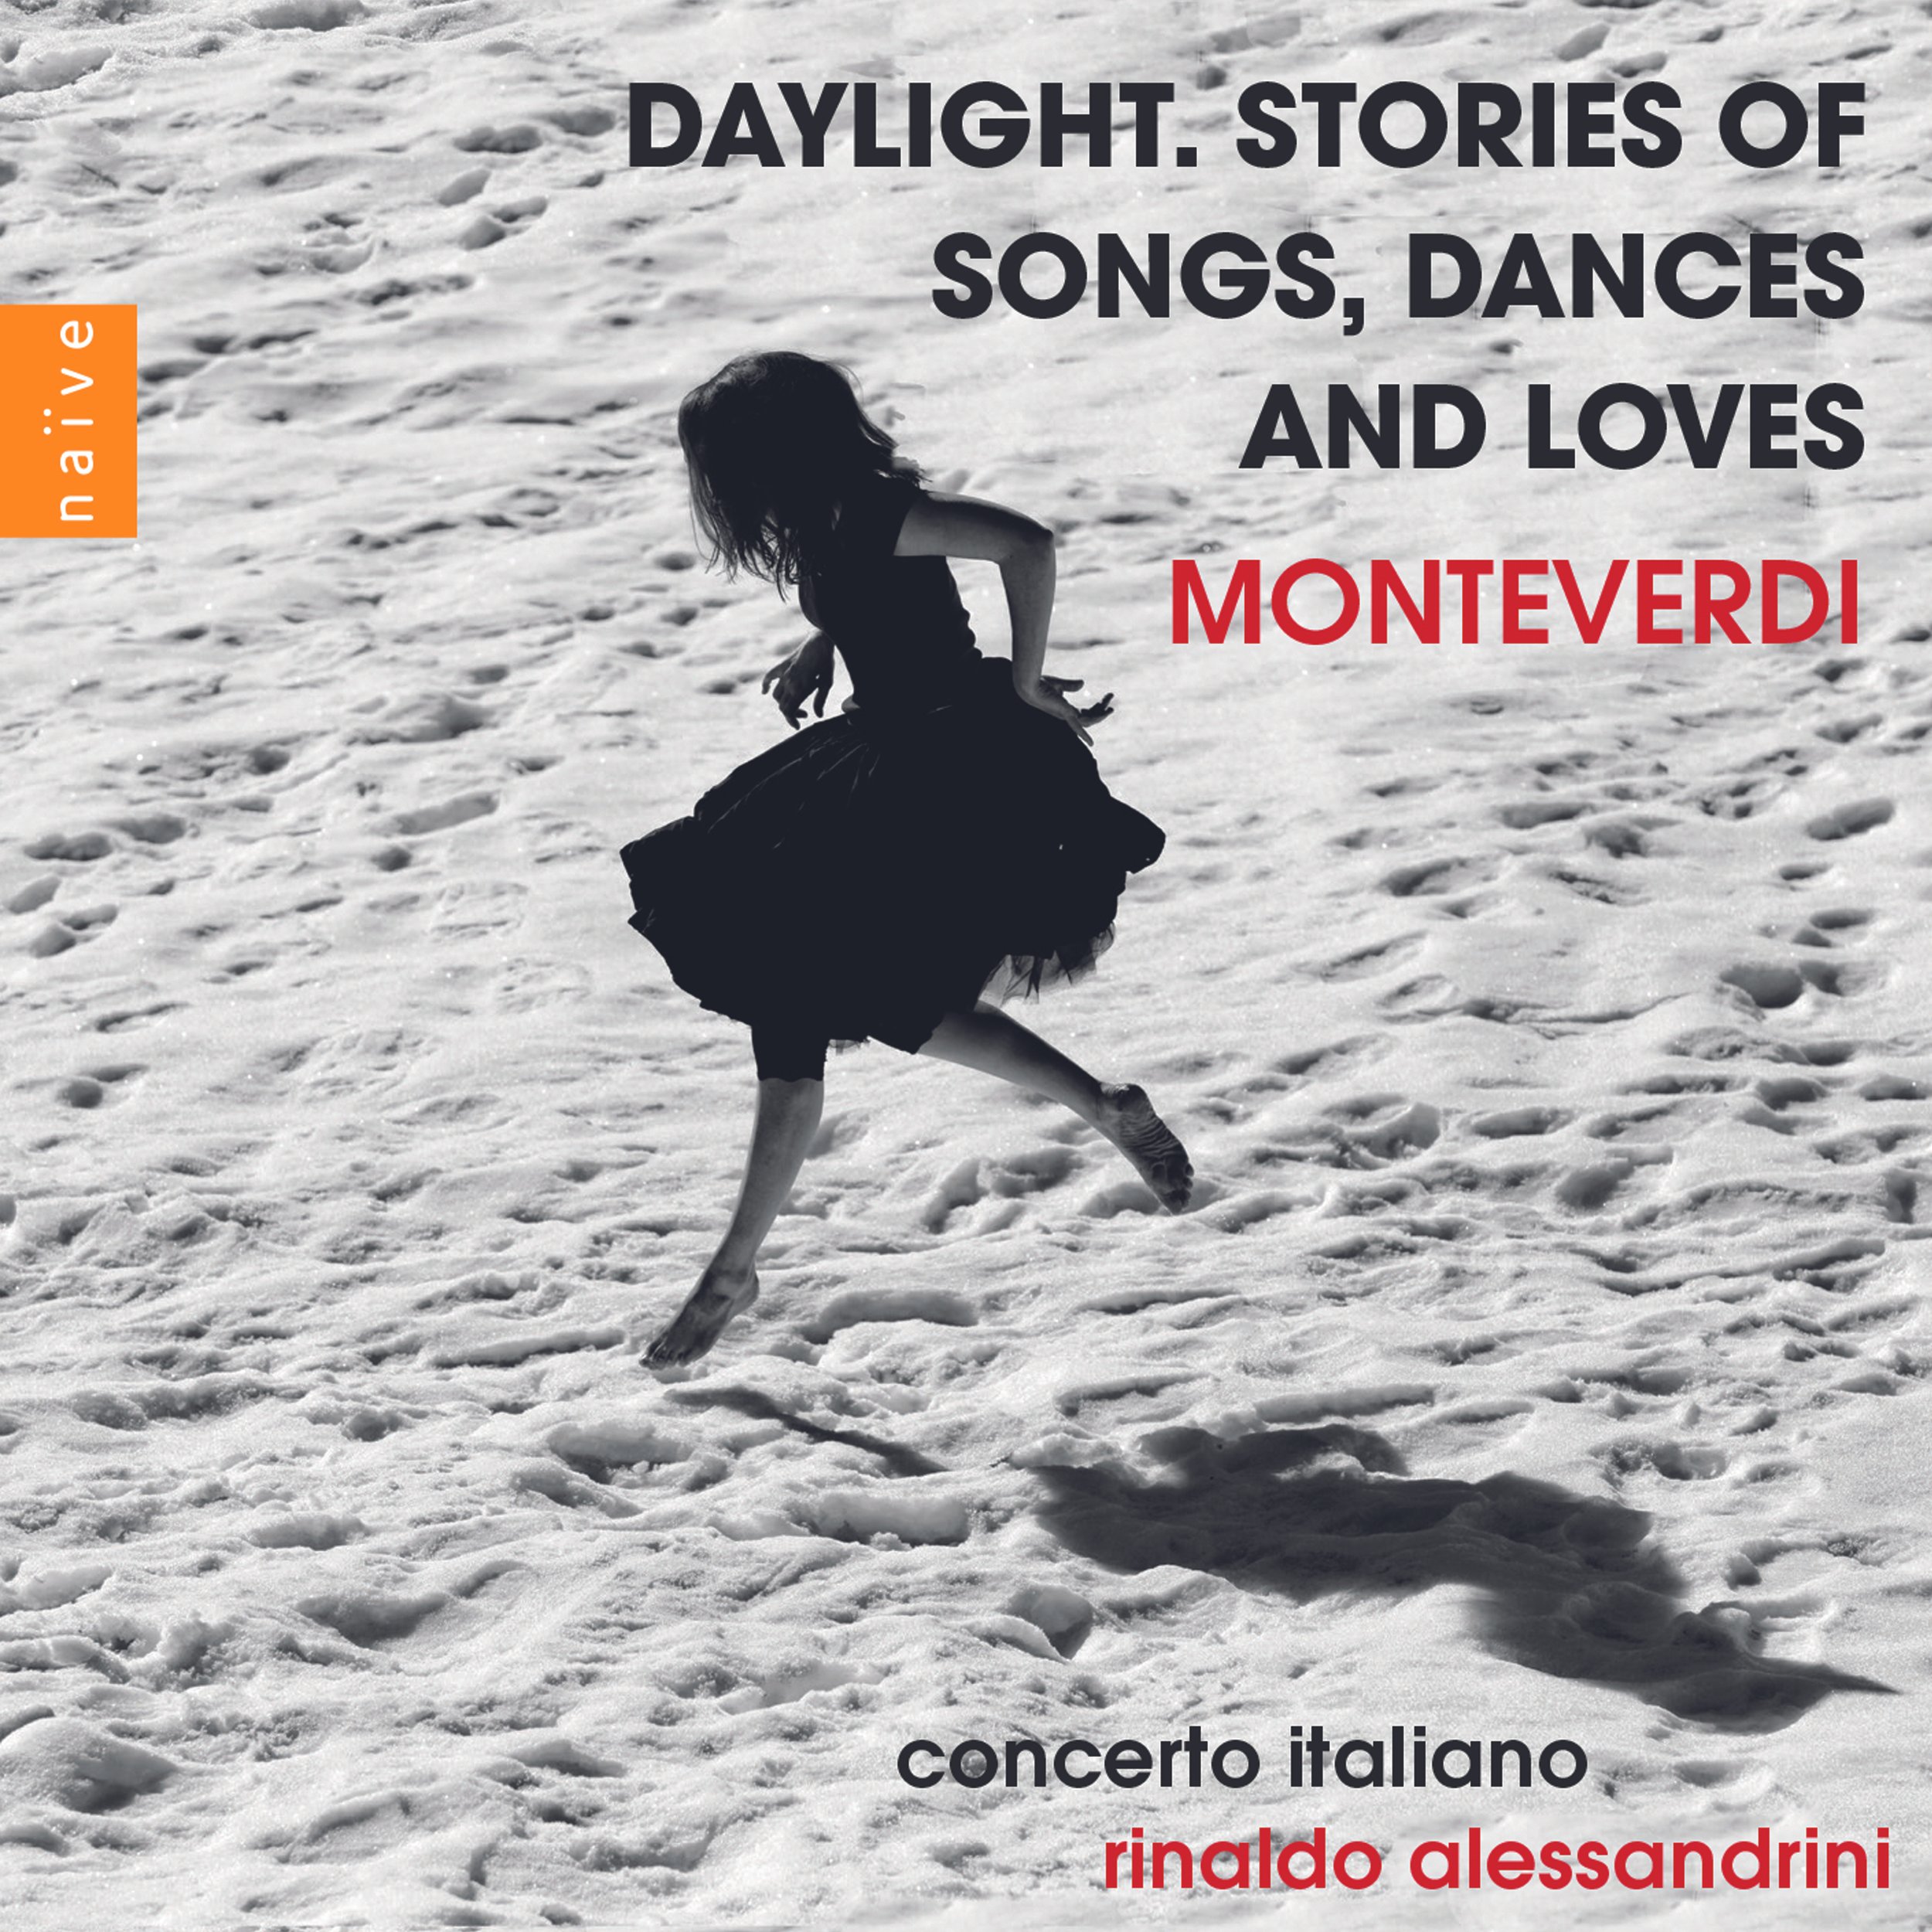 OP7366 K Monteverdi Daylight 3000x3000.jpg